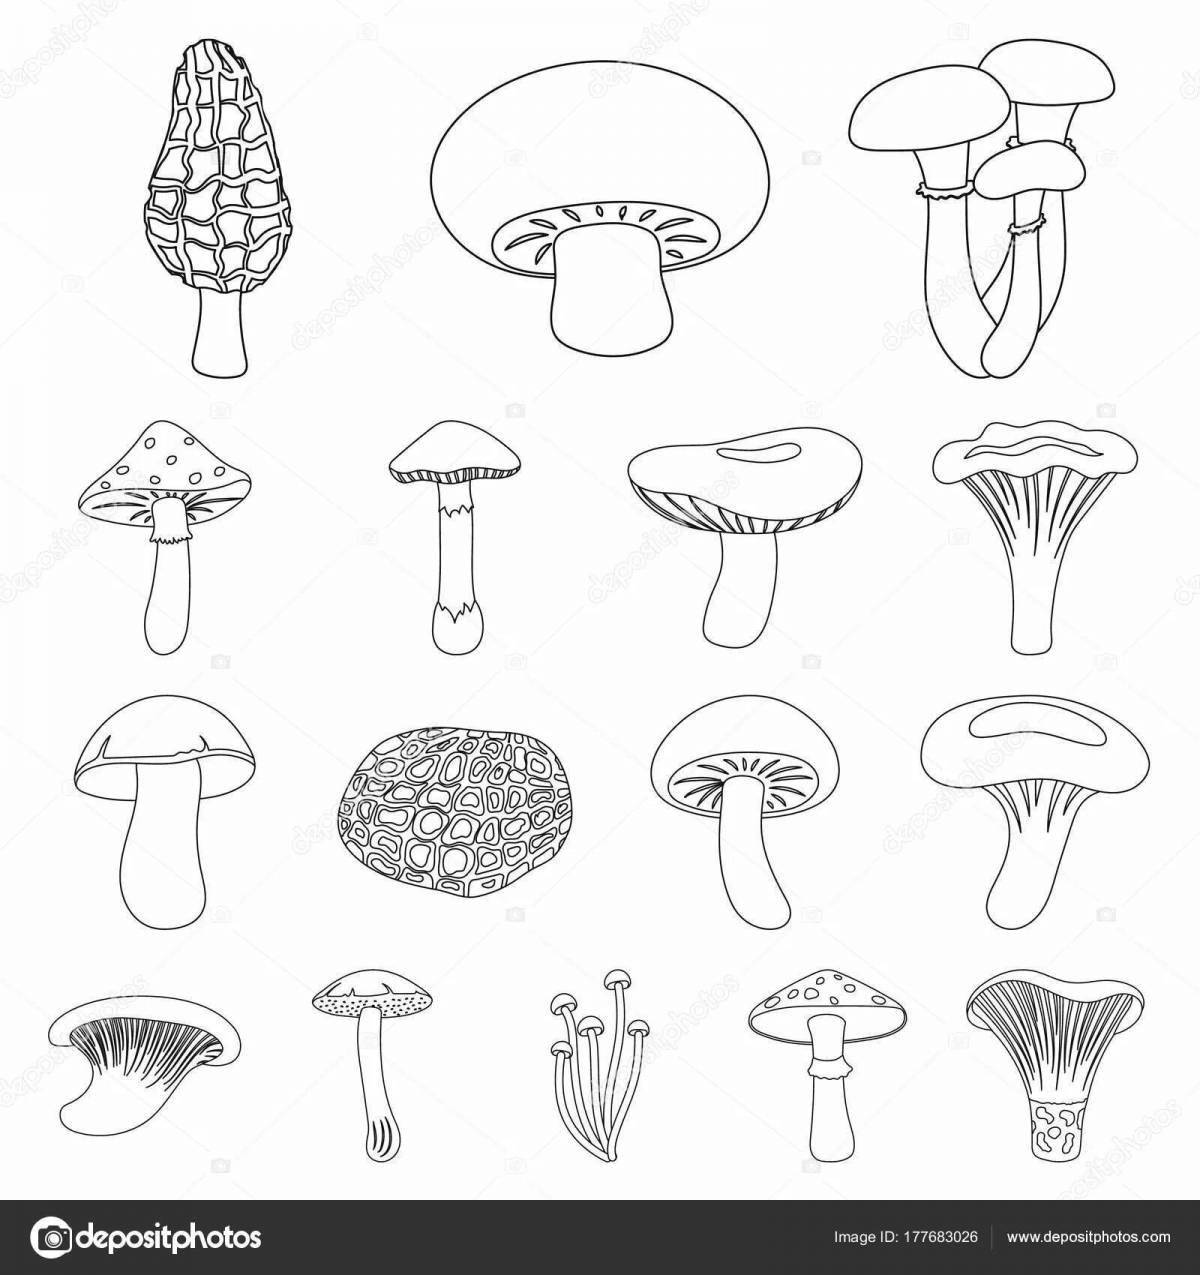 Detailed coloring of edible mushrooms